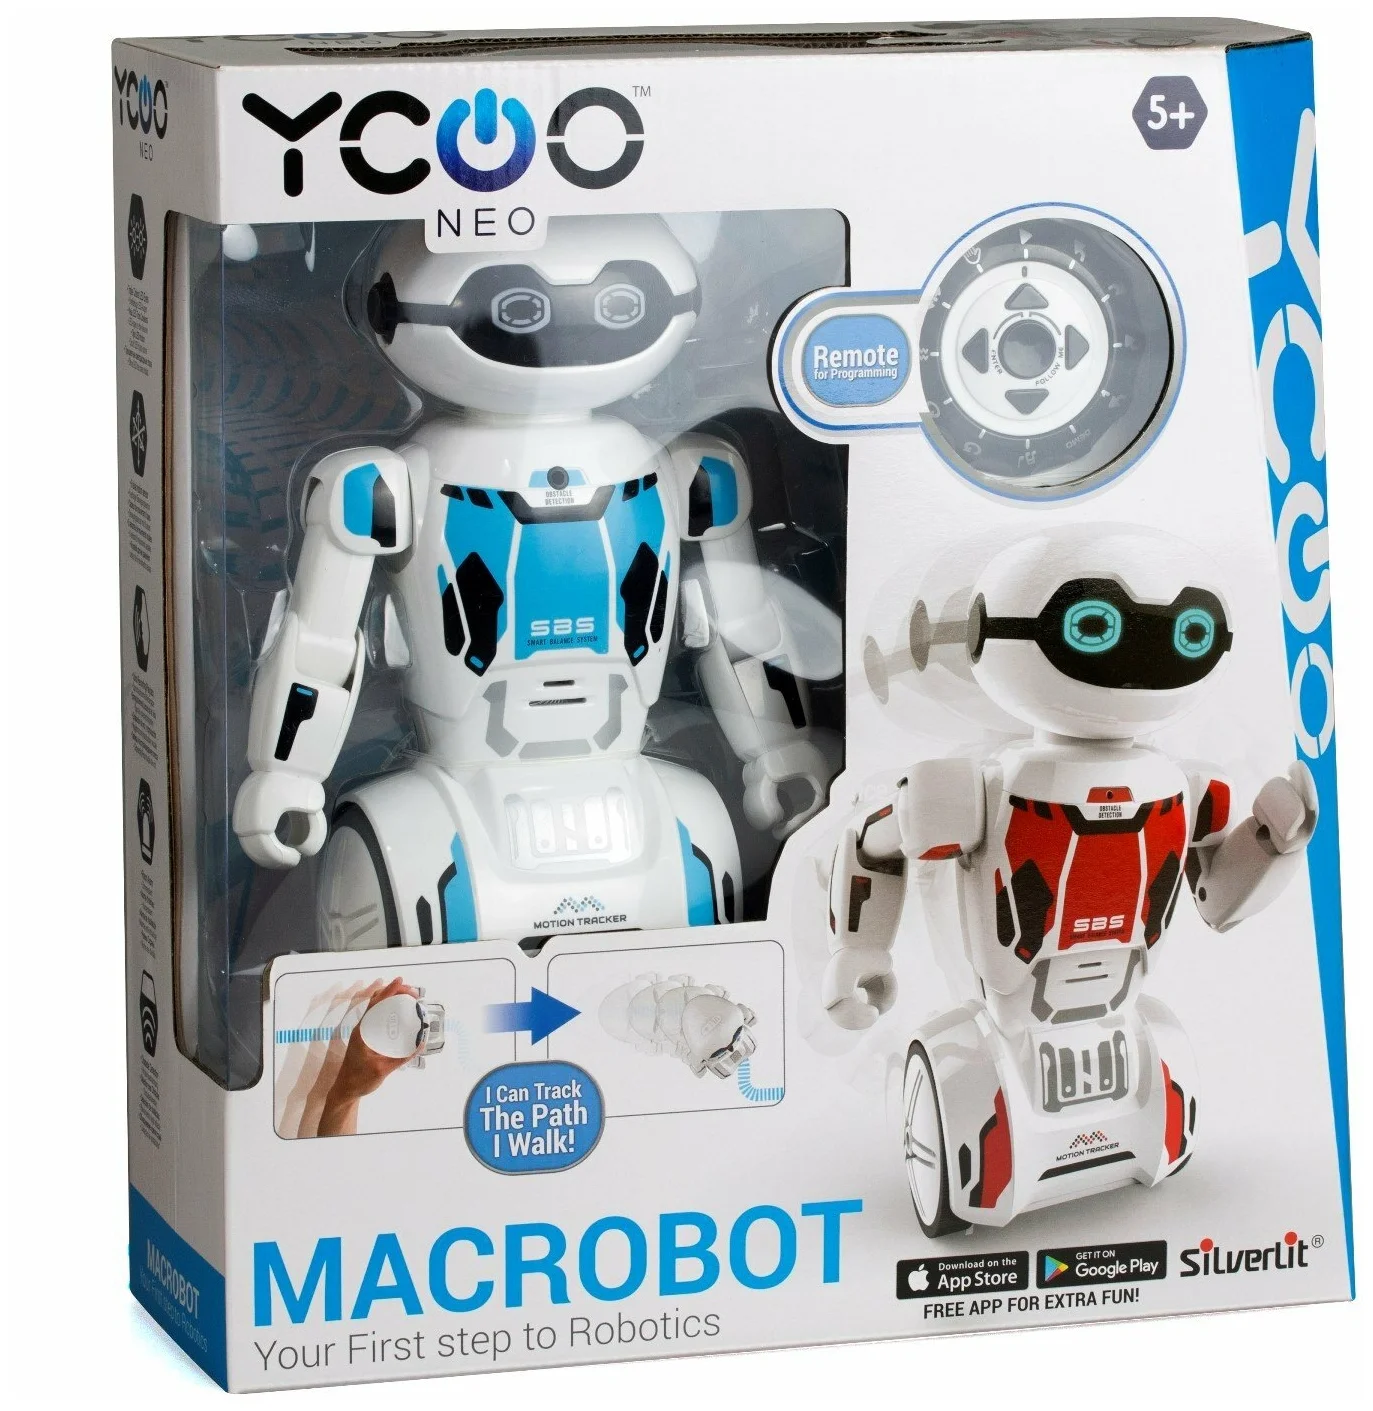 YCOO Neo "Макробот" - тип батареек: 4 АА